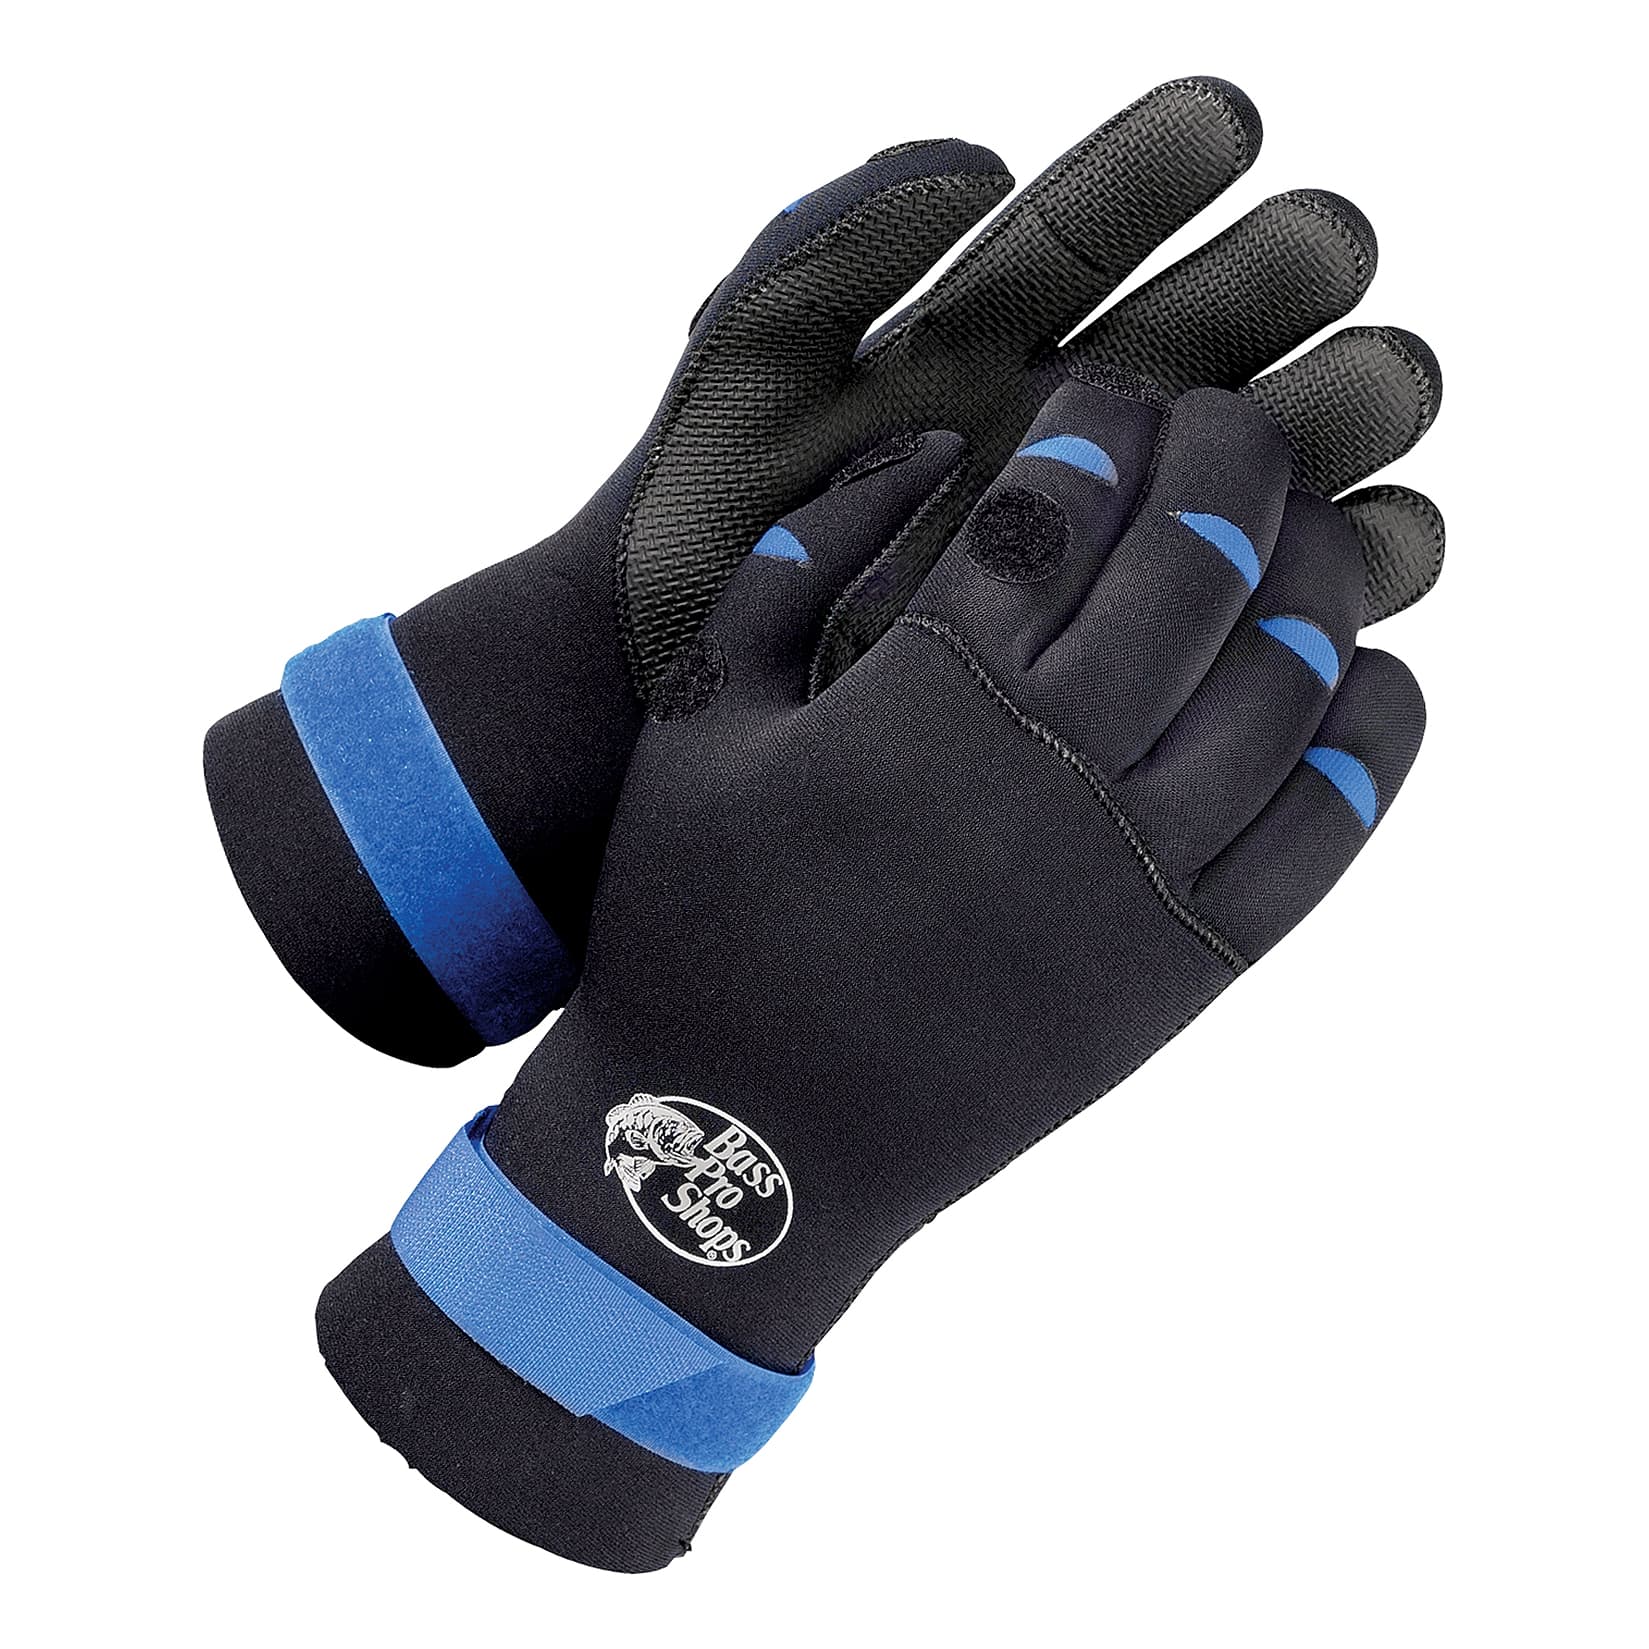 Kinetic Neo Skin Waterproof Gloves - Rory's Fishing Tackle